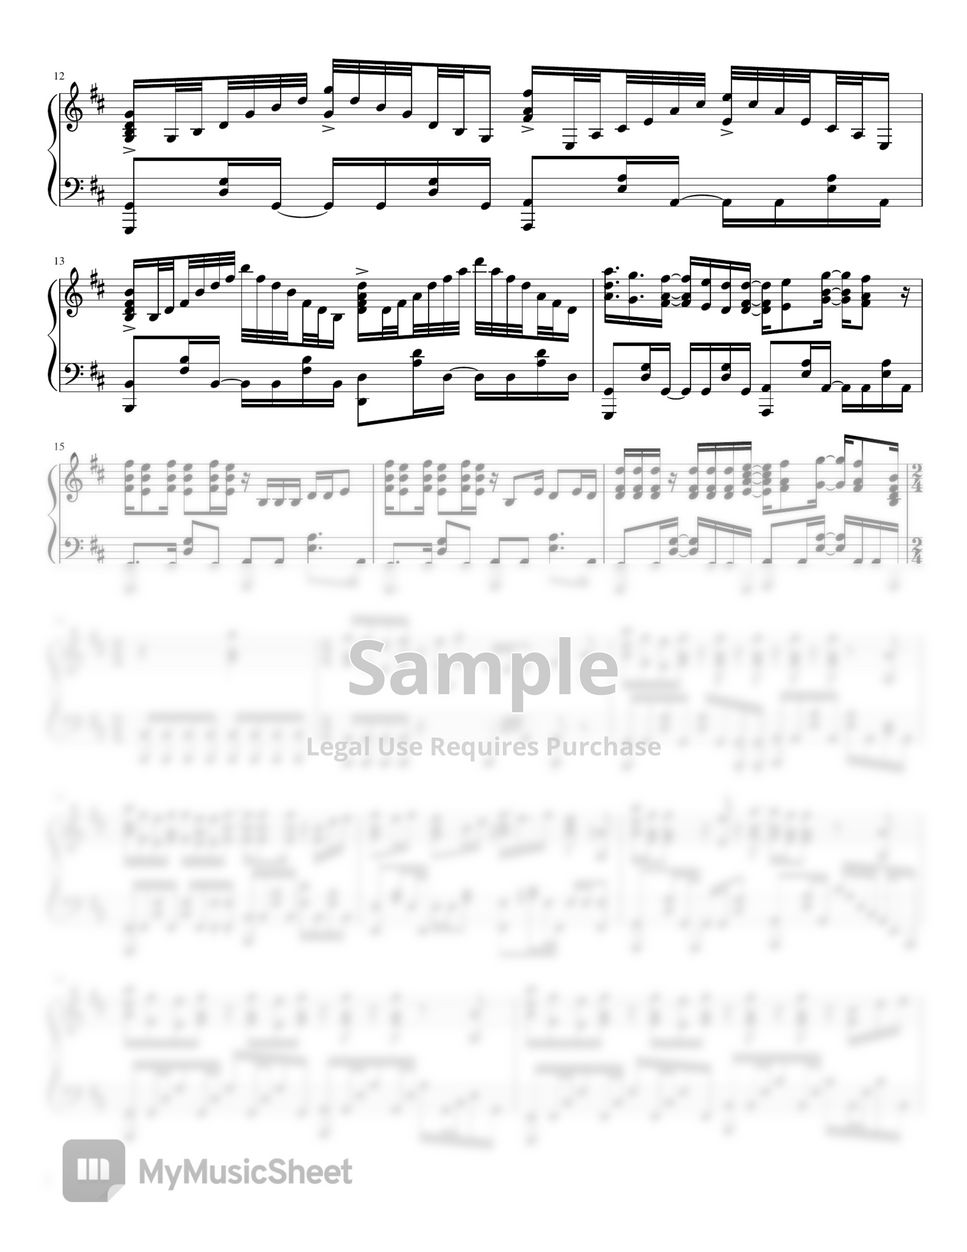 MADKID - RISE - MADKID (Tate no Yuusha no Nariagari OP) Piano by BWC Piano Tutorial